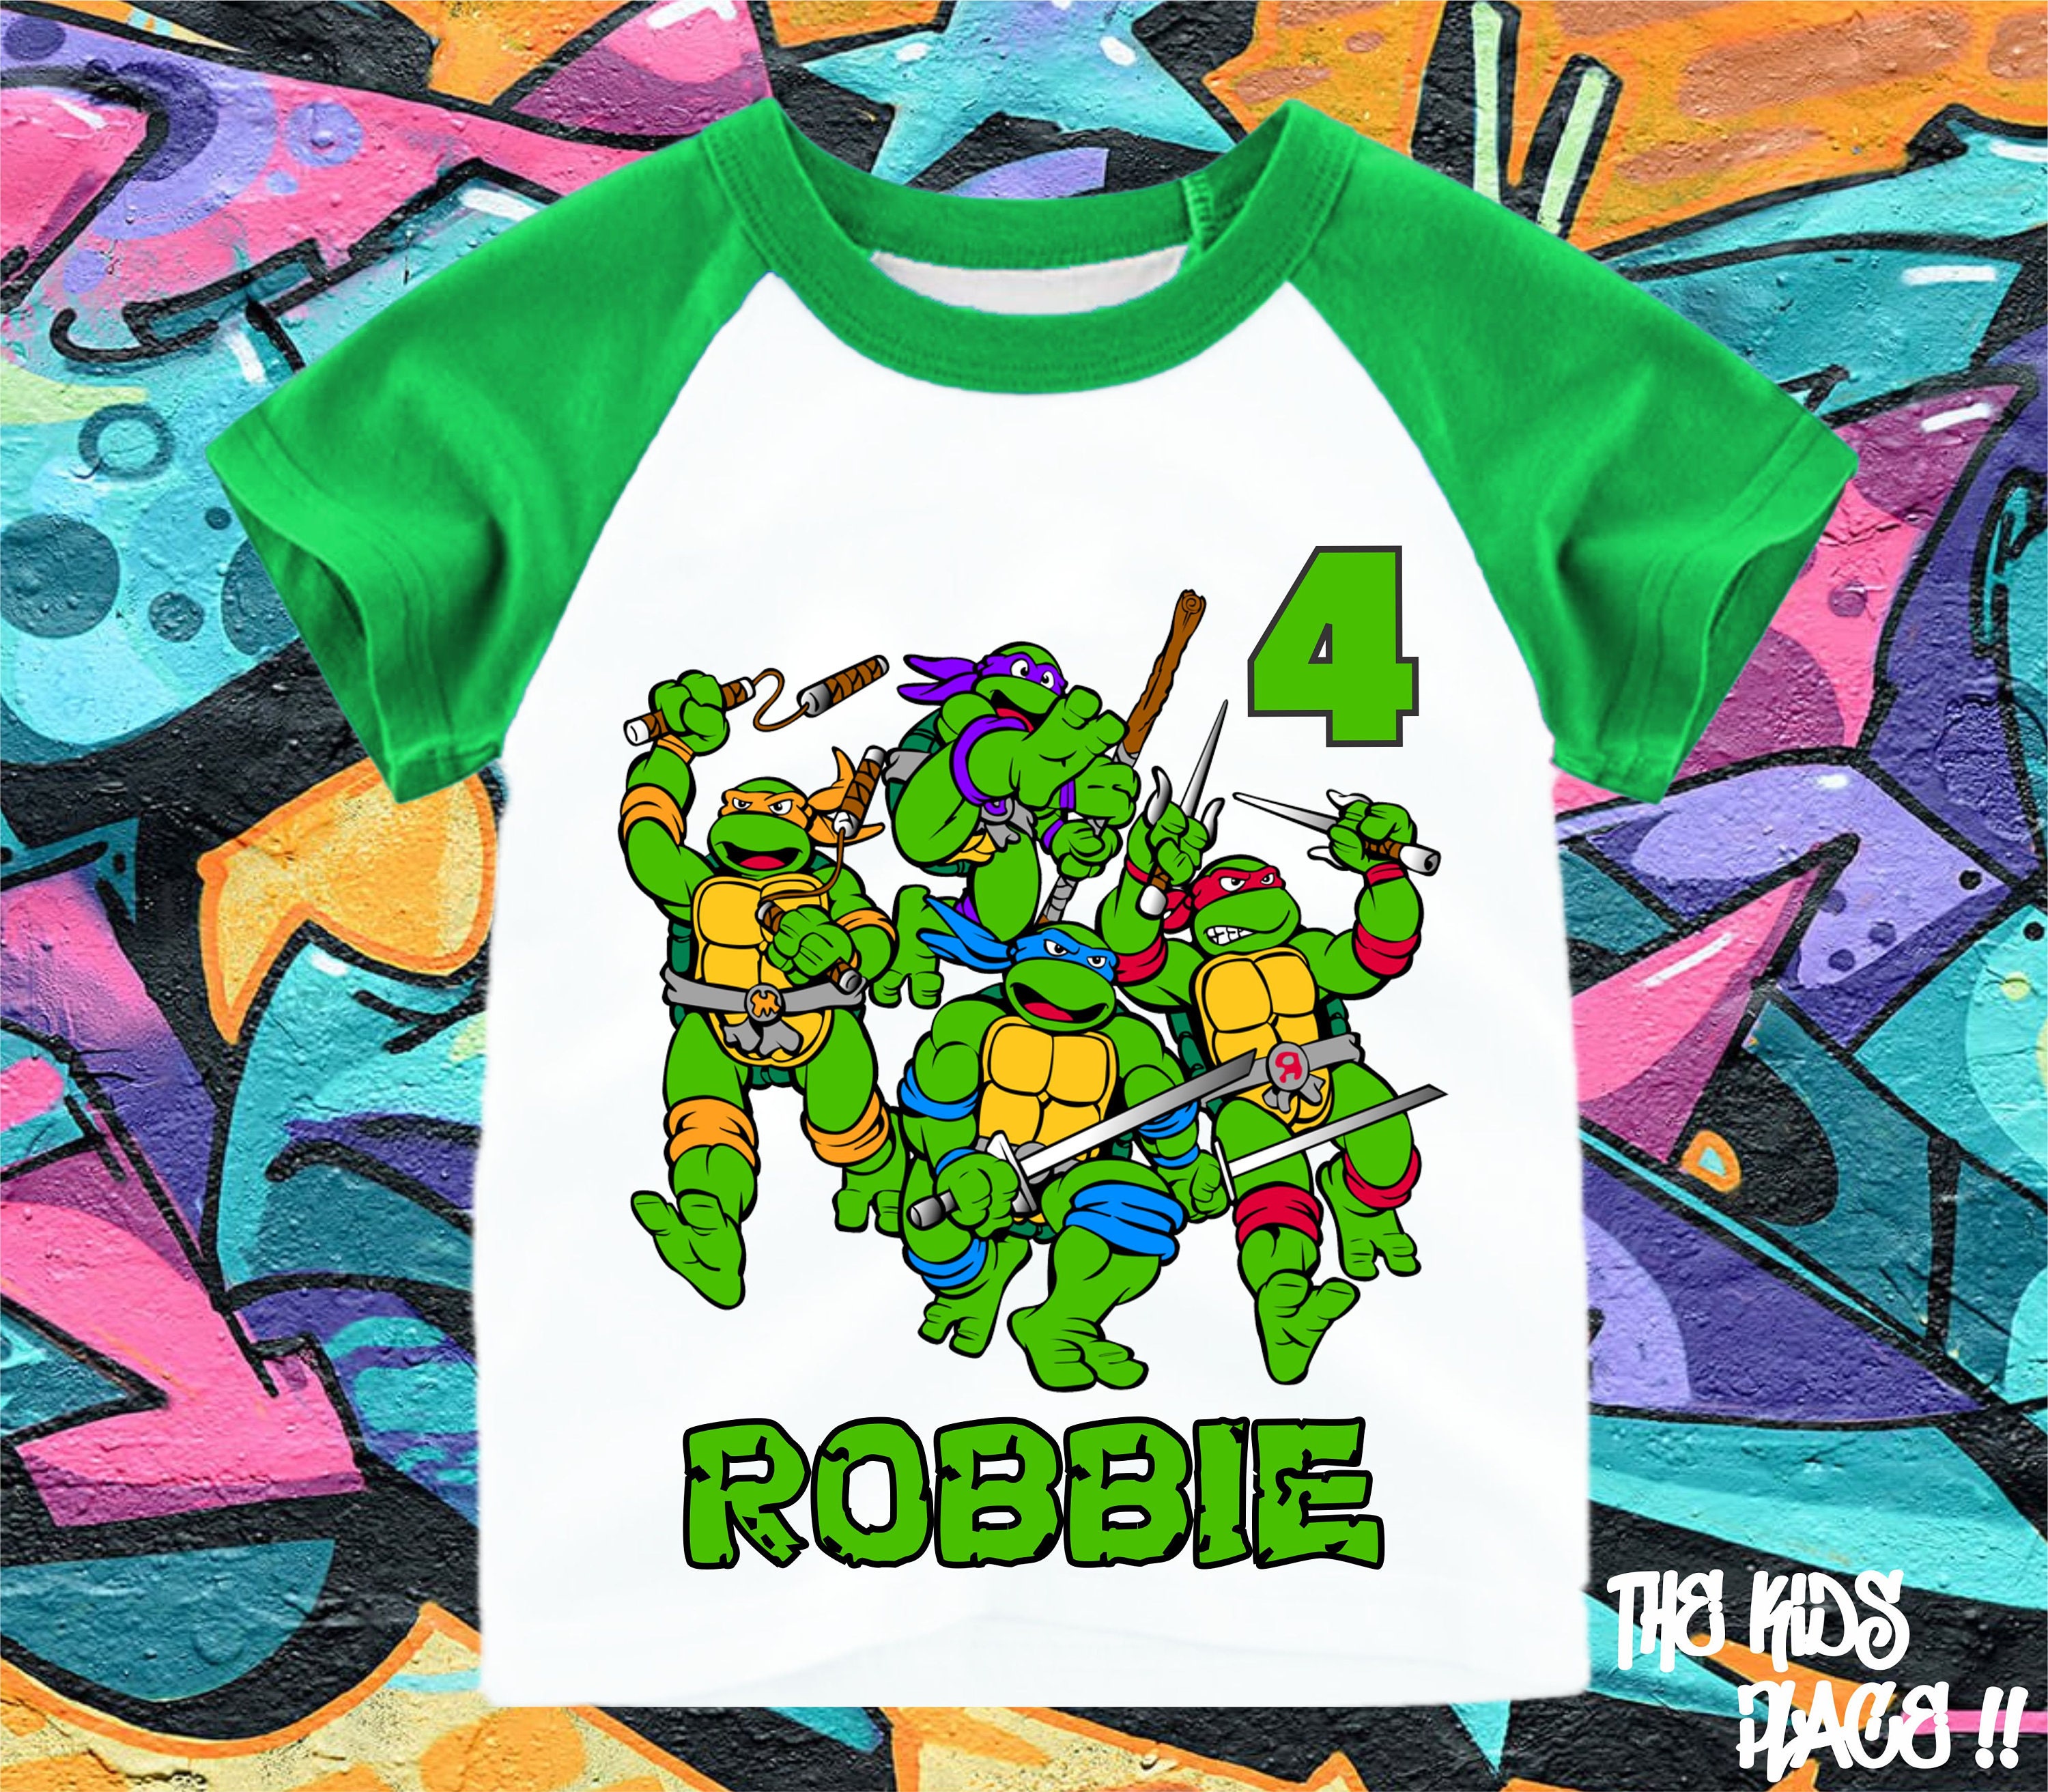 Teenage Mutant Ninja Turtle Mikey Personalized Birthday Shirt Party Favor 